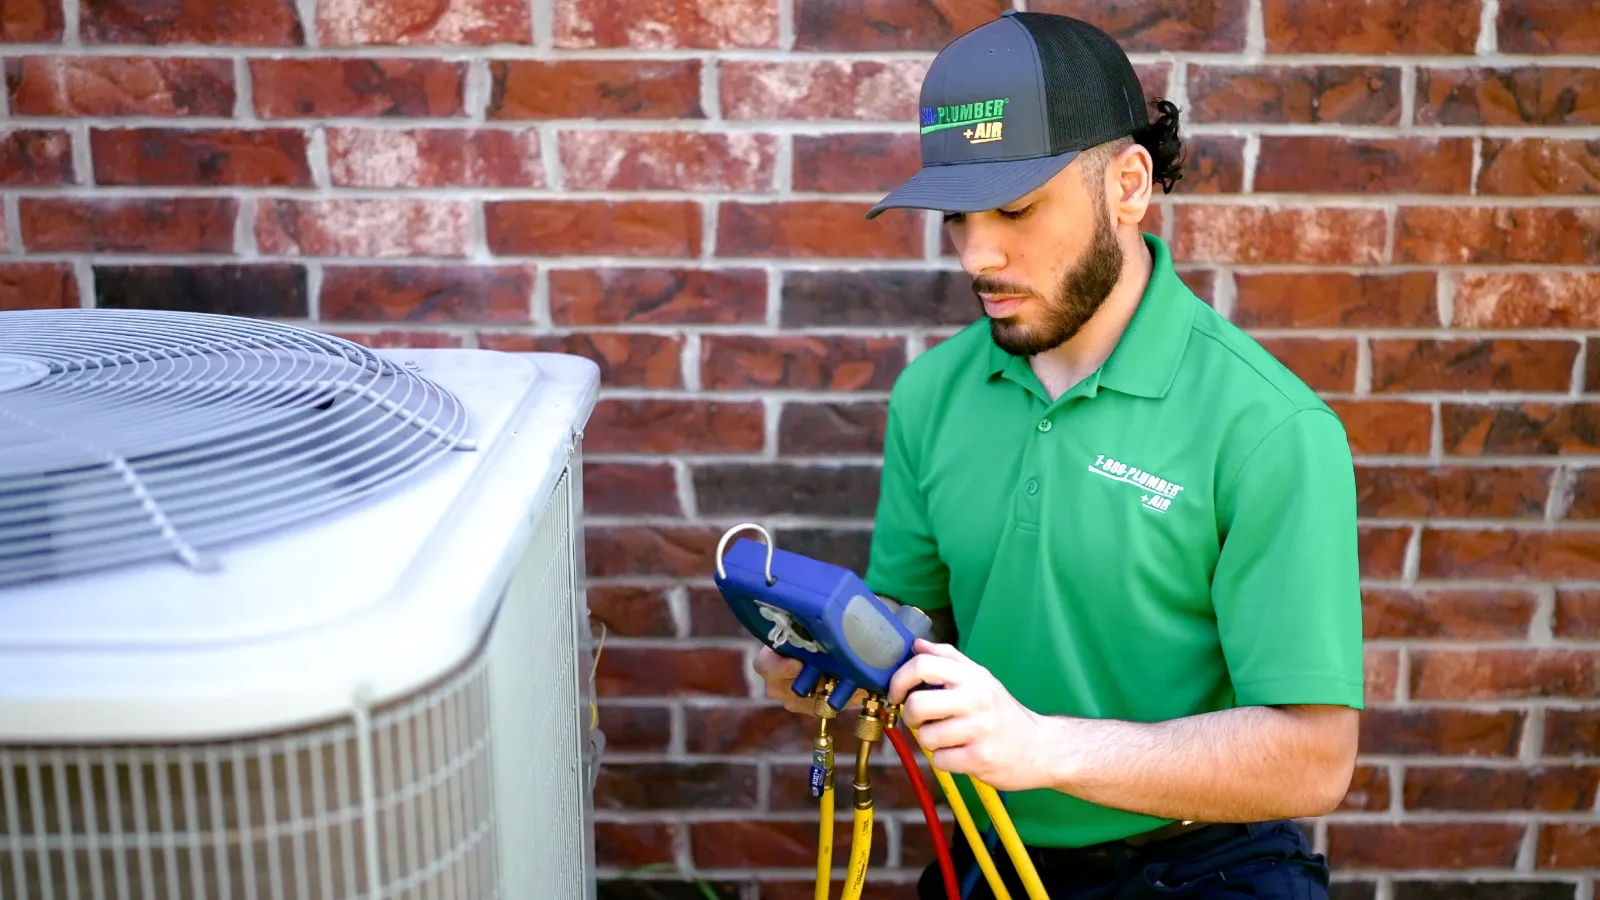 A Youngstown heating technician repairs an outdoor heater